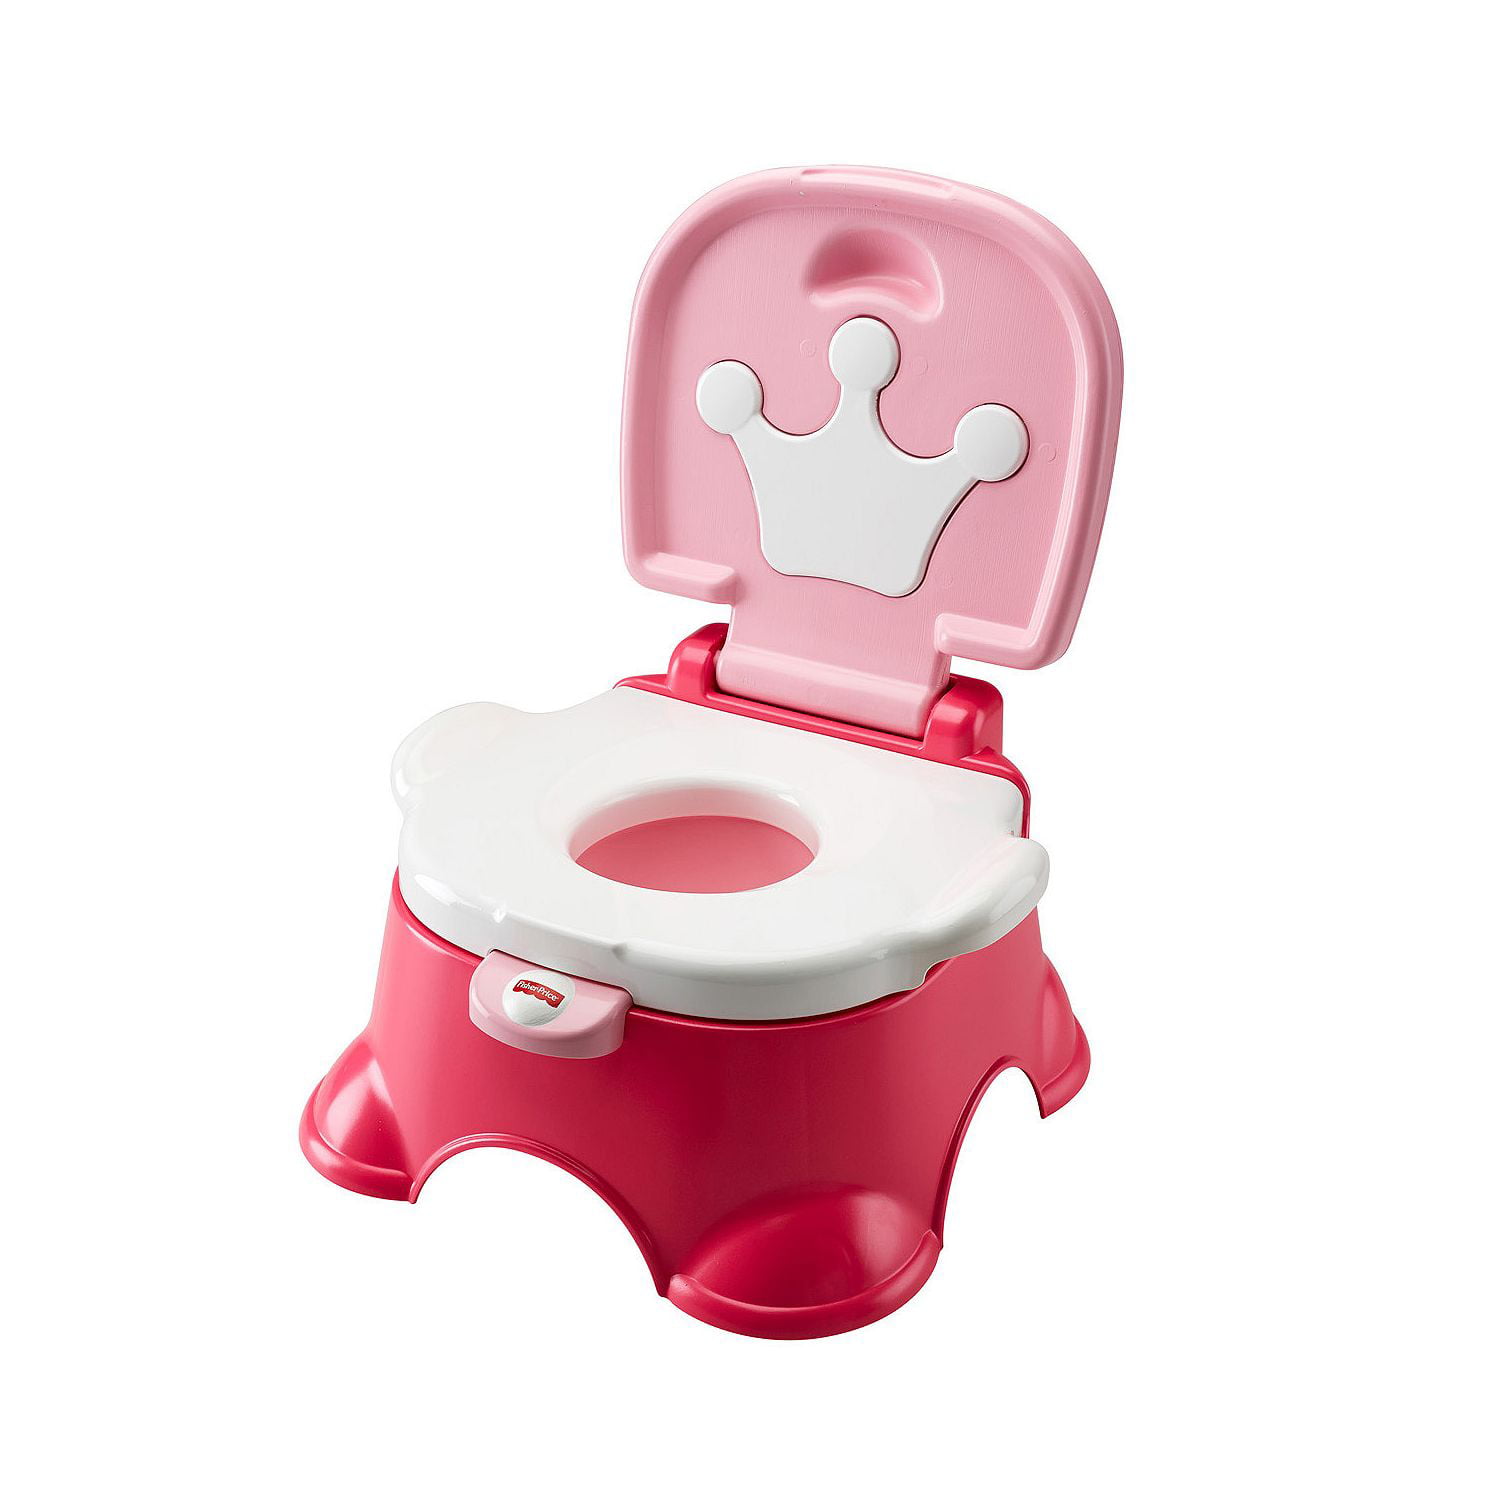 Product of FisherPrice Princess Potty Chair Potties